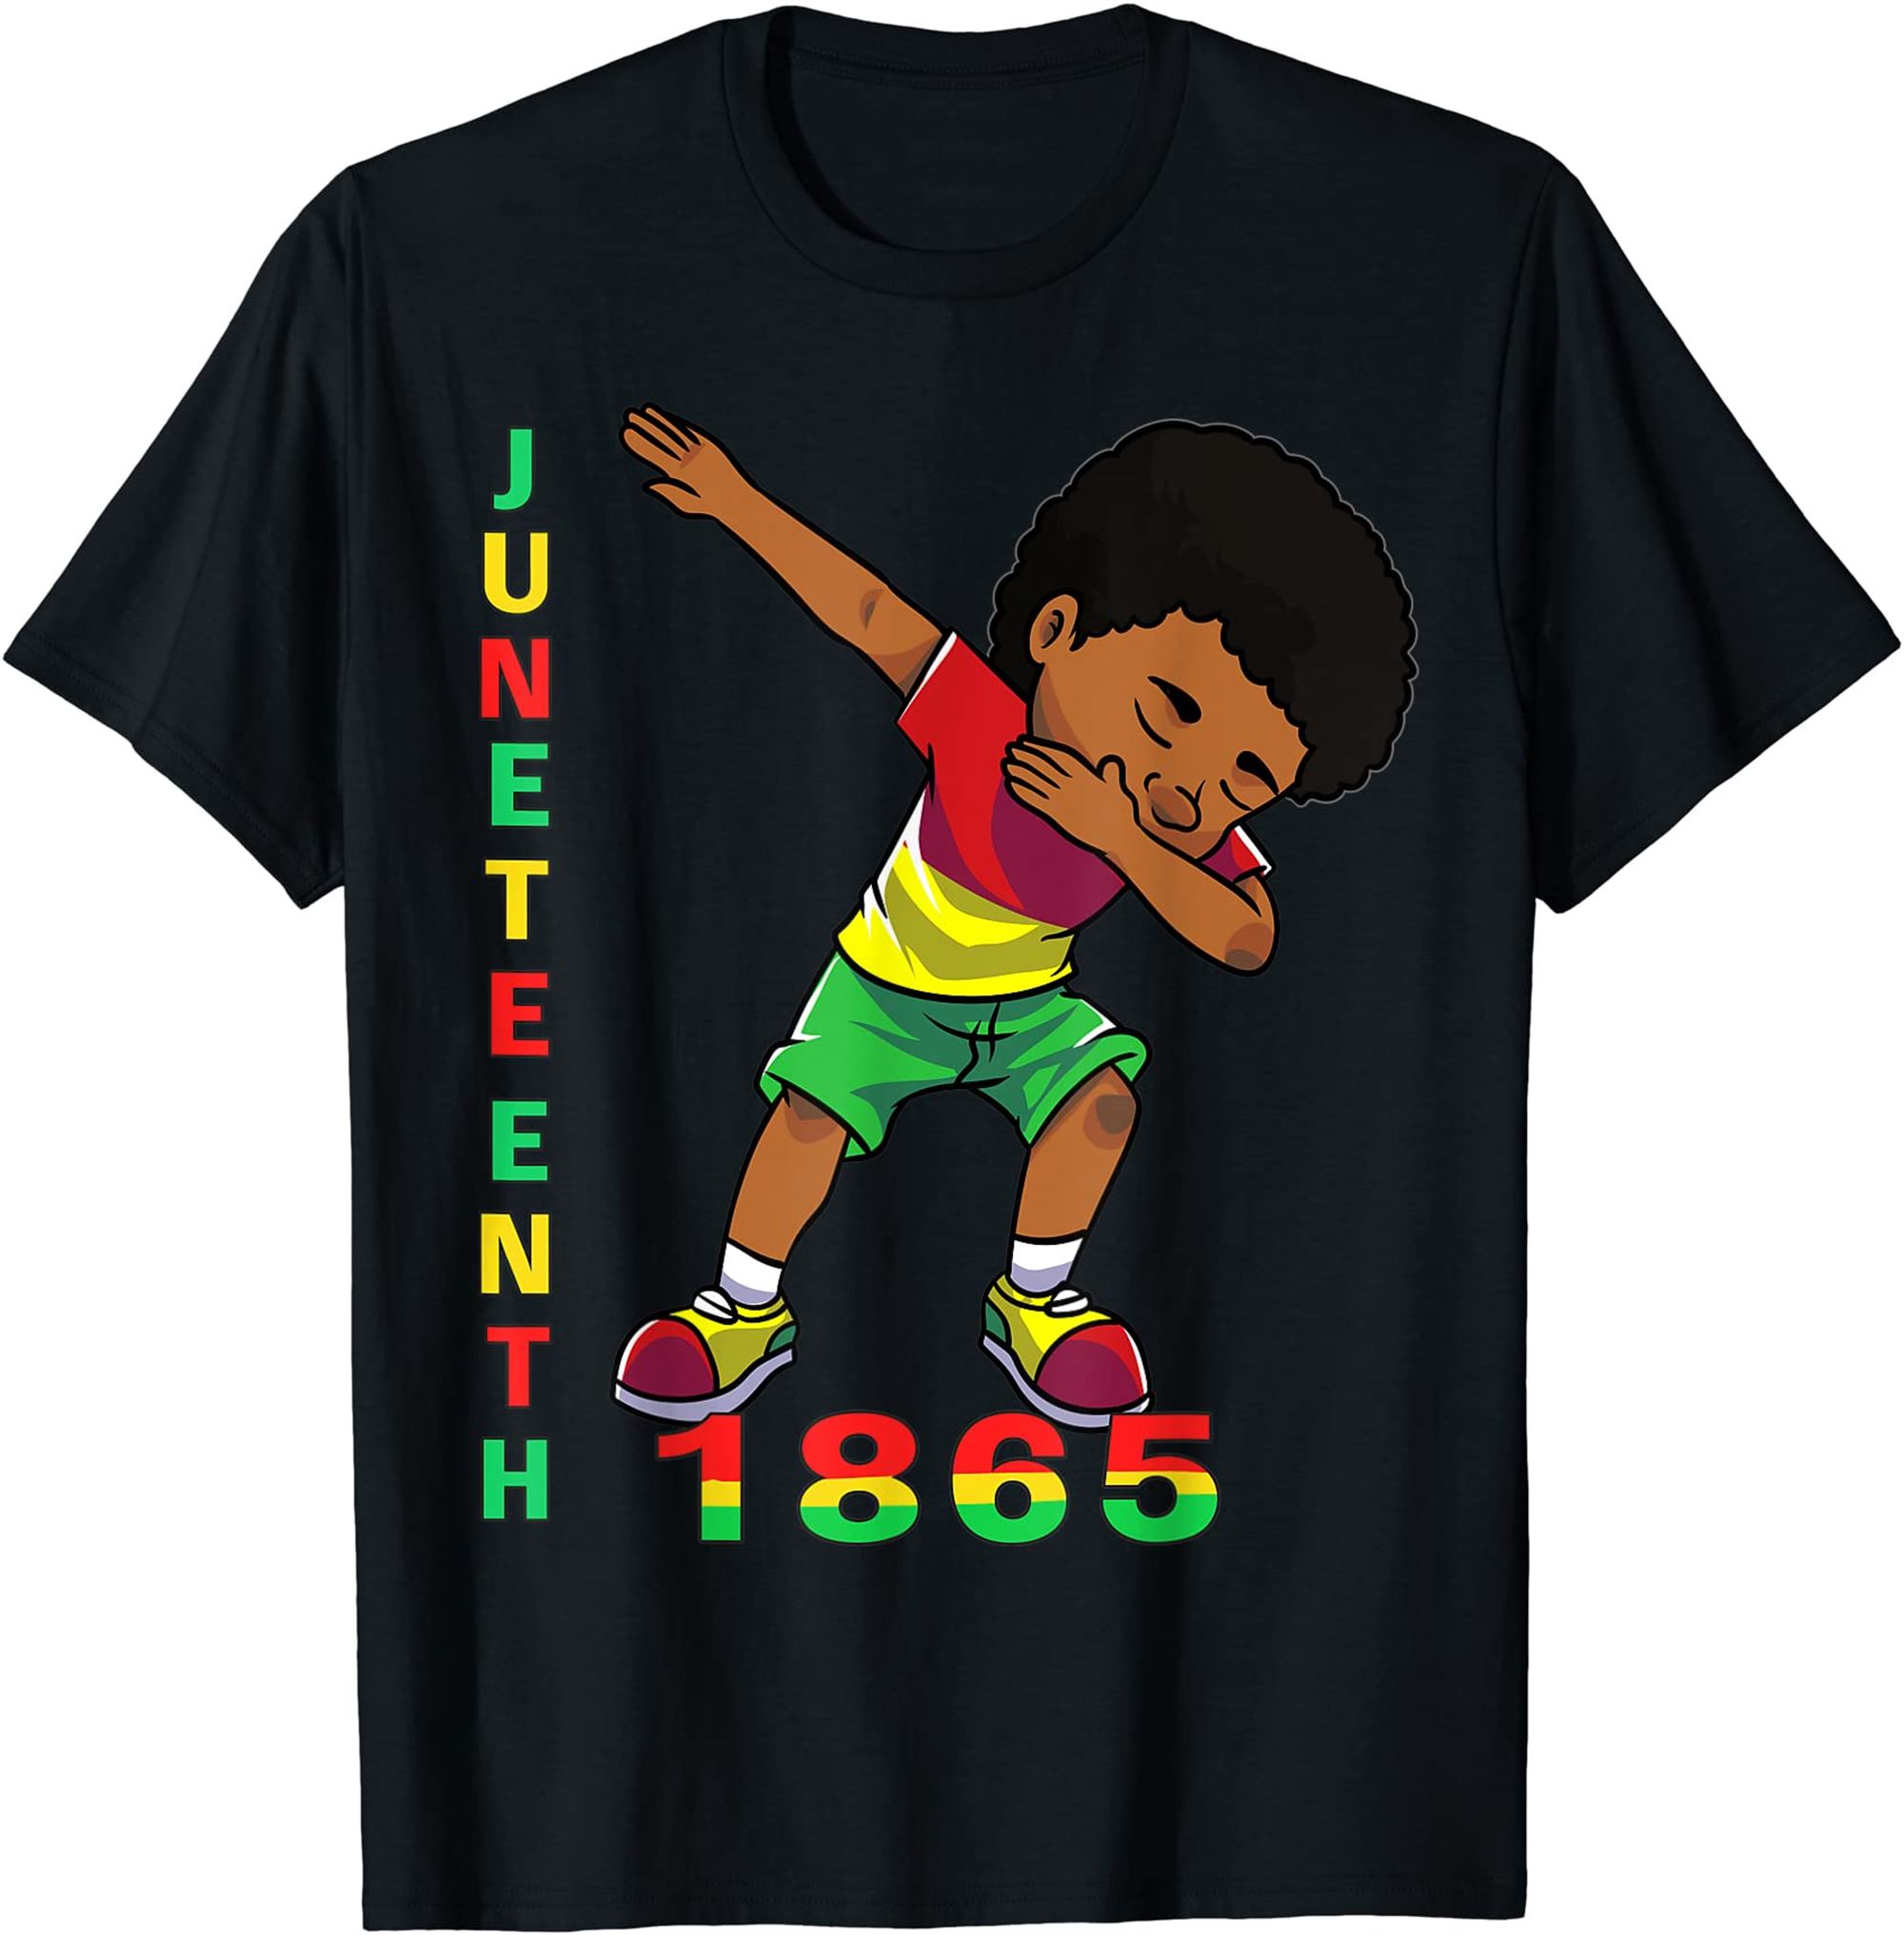 Juneteenth 1865 King Dabbing Black African American Boys Kid T-shirt Size Up To 5xl